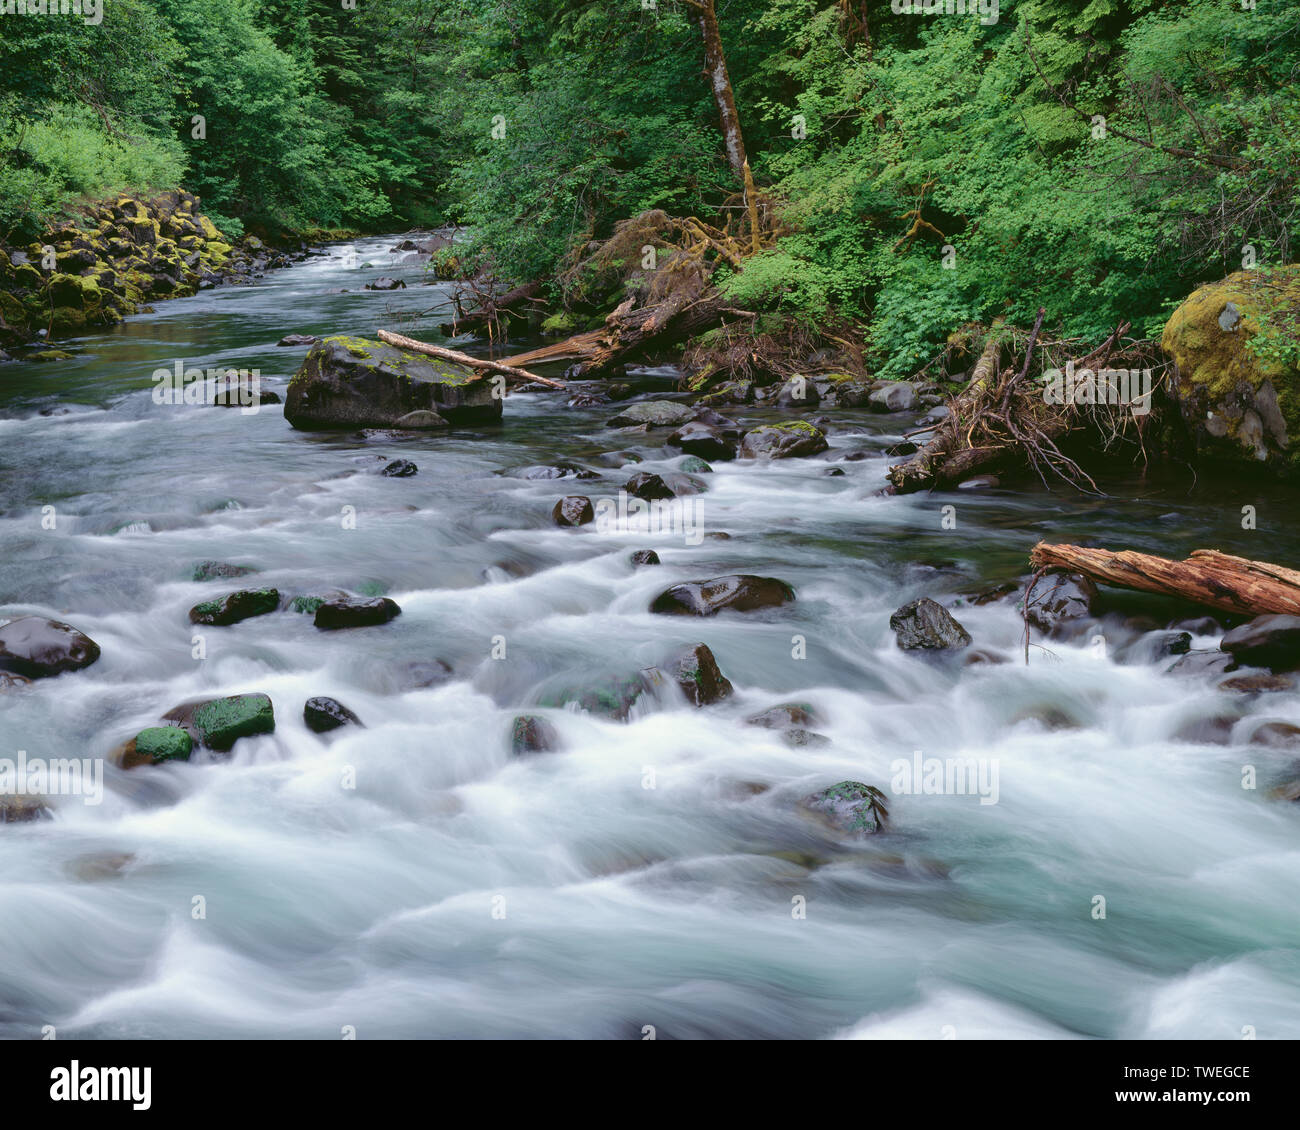 USA, Washington, Olympic National Park, Sol Duc River flows through lush rainforest valley. Stock Photo